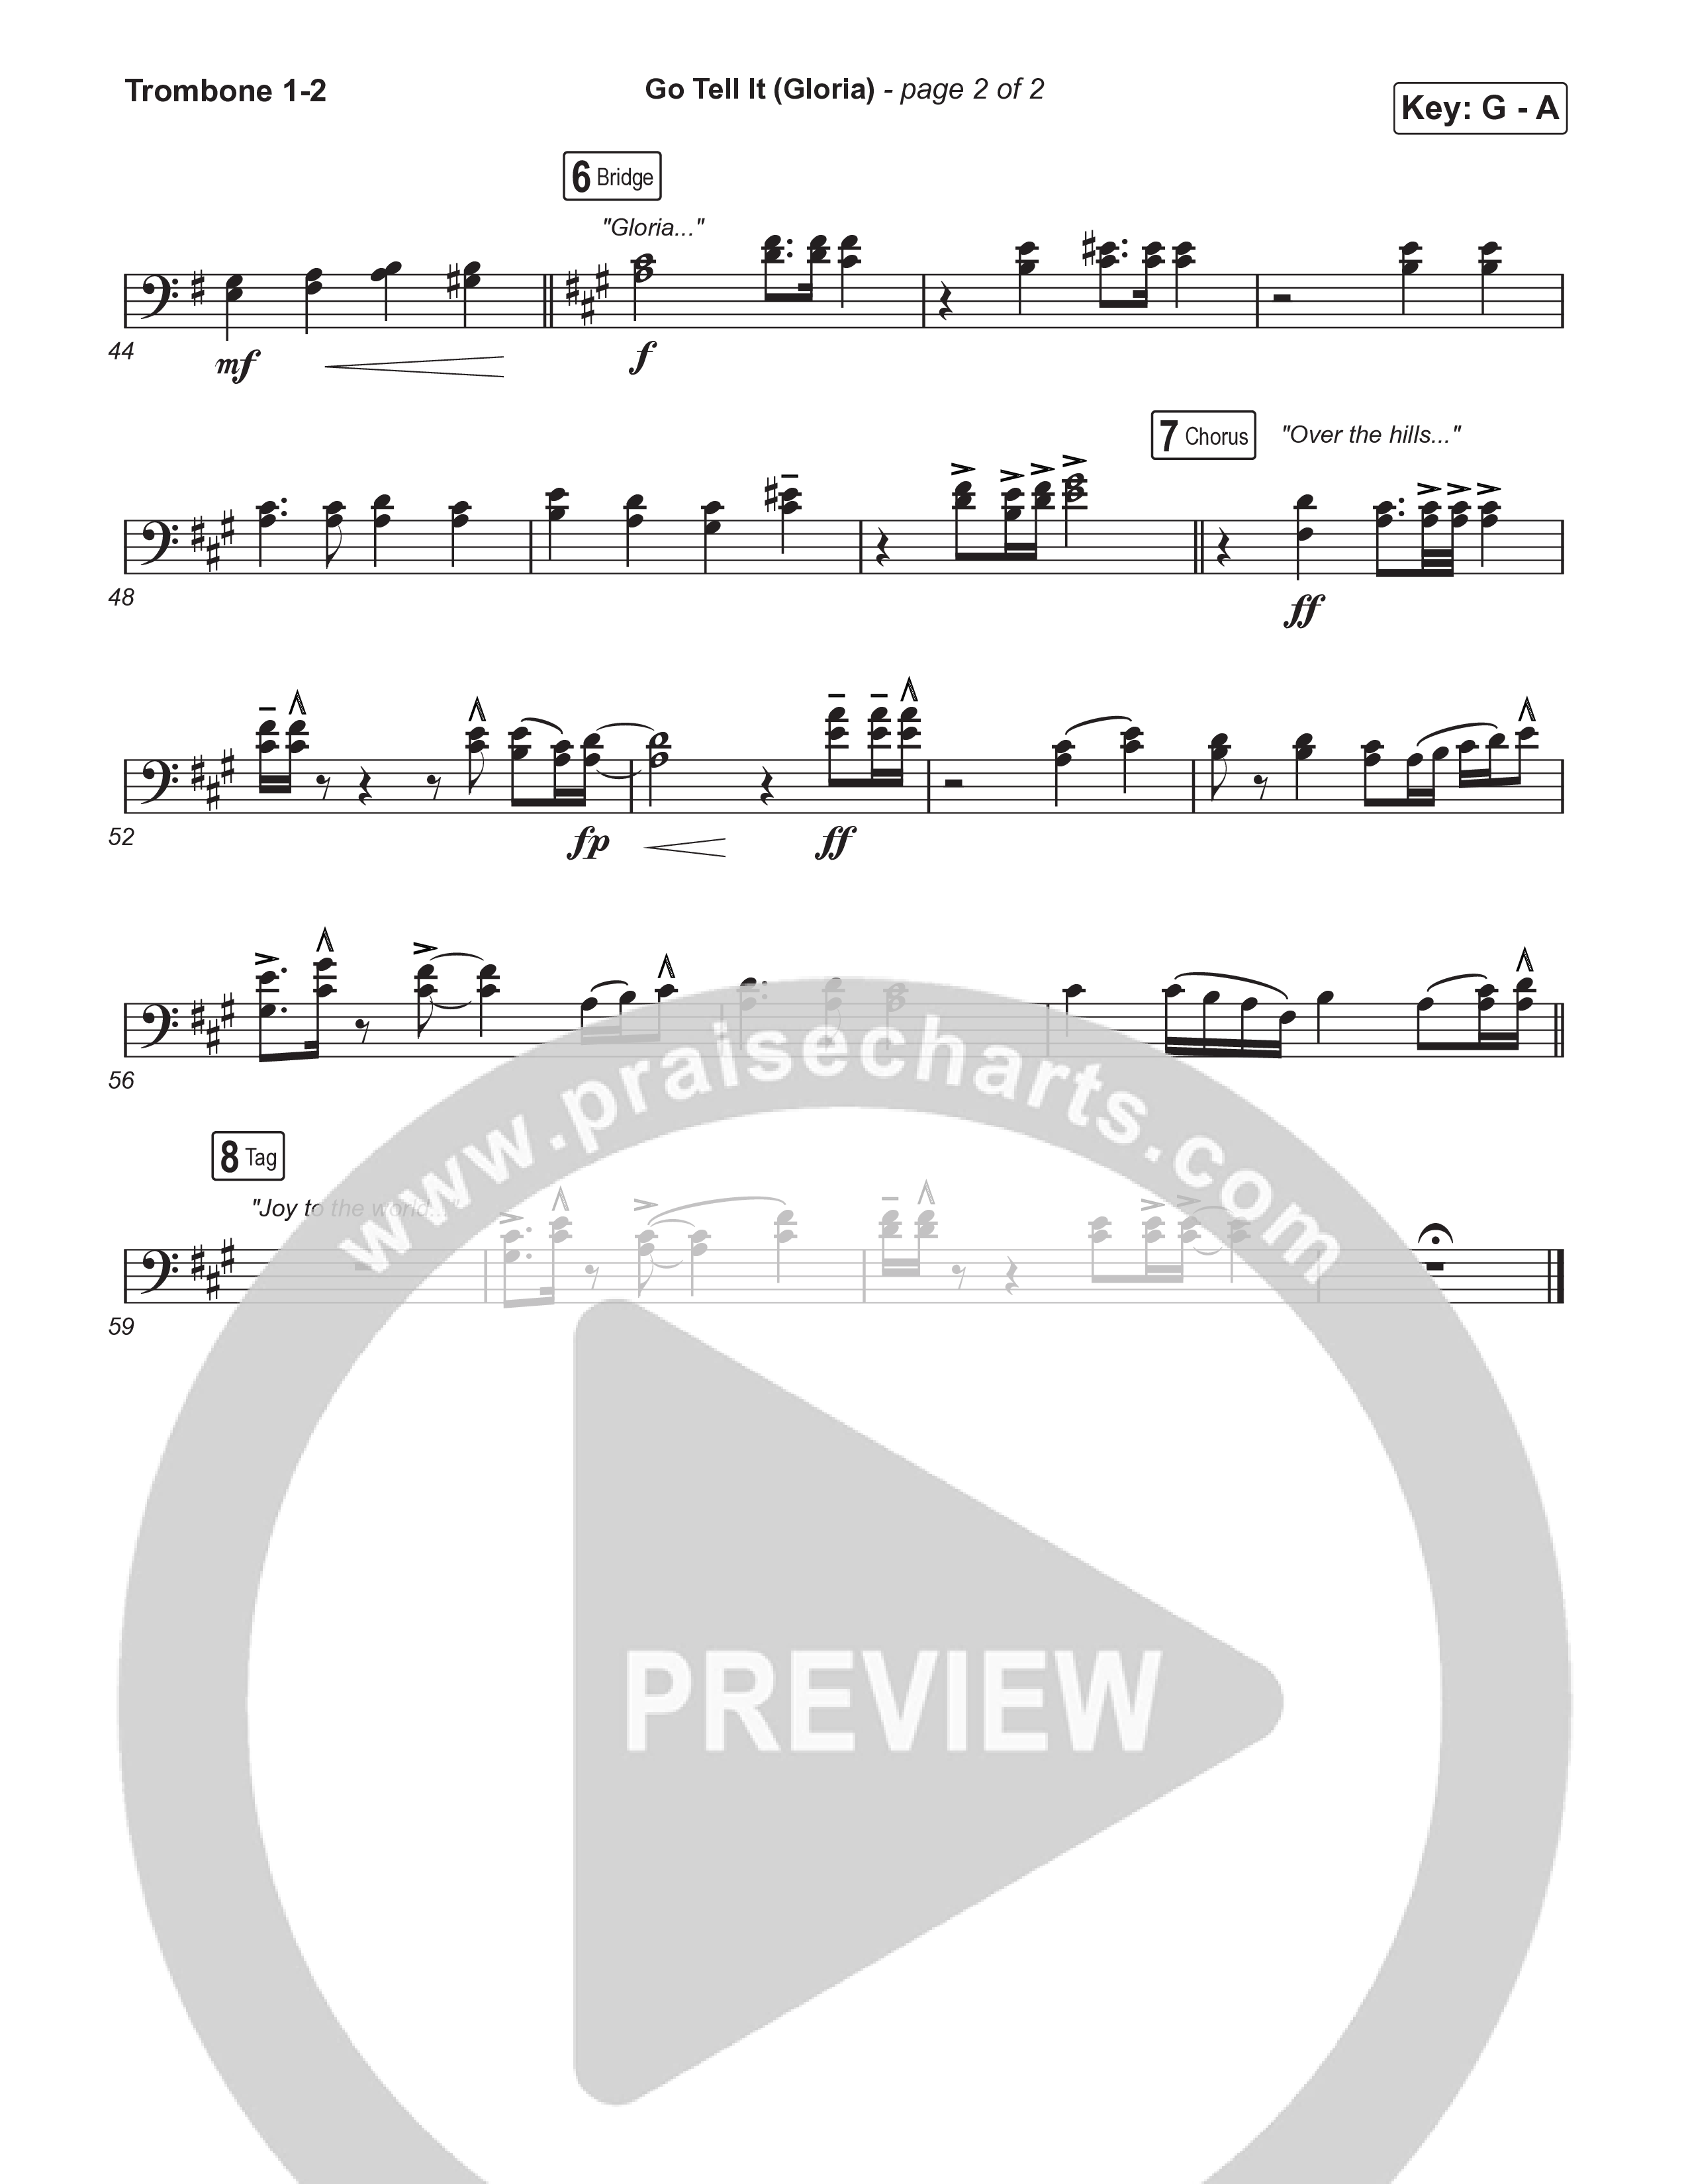 Go Tell It (Gloria) (Choral Anthem SATB) Trombone 1,2 (Matt Maher / Arr. Luke Gambill)